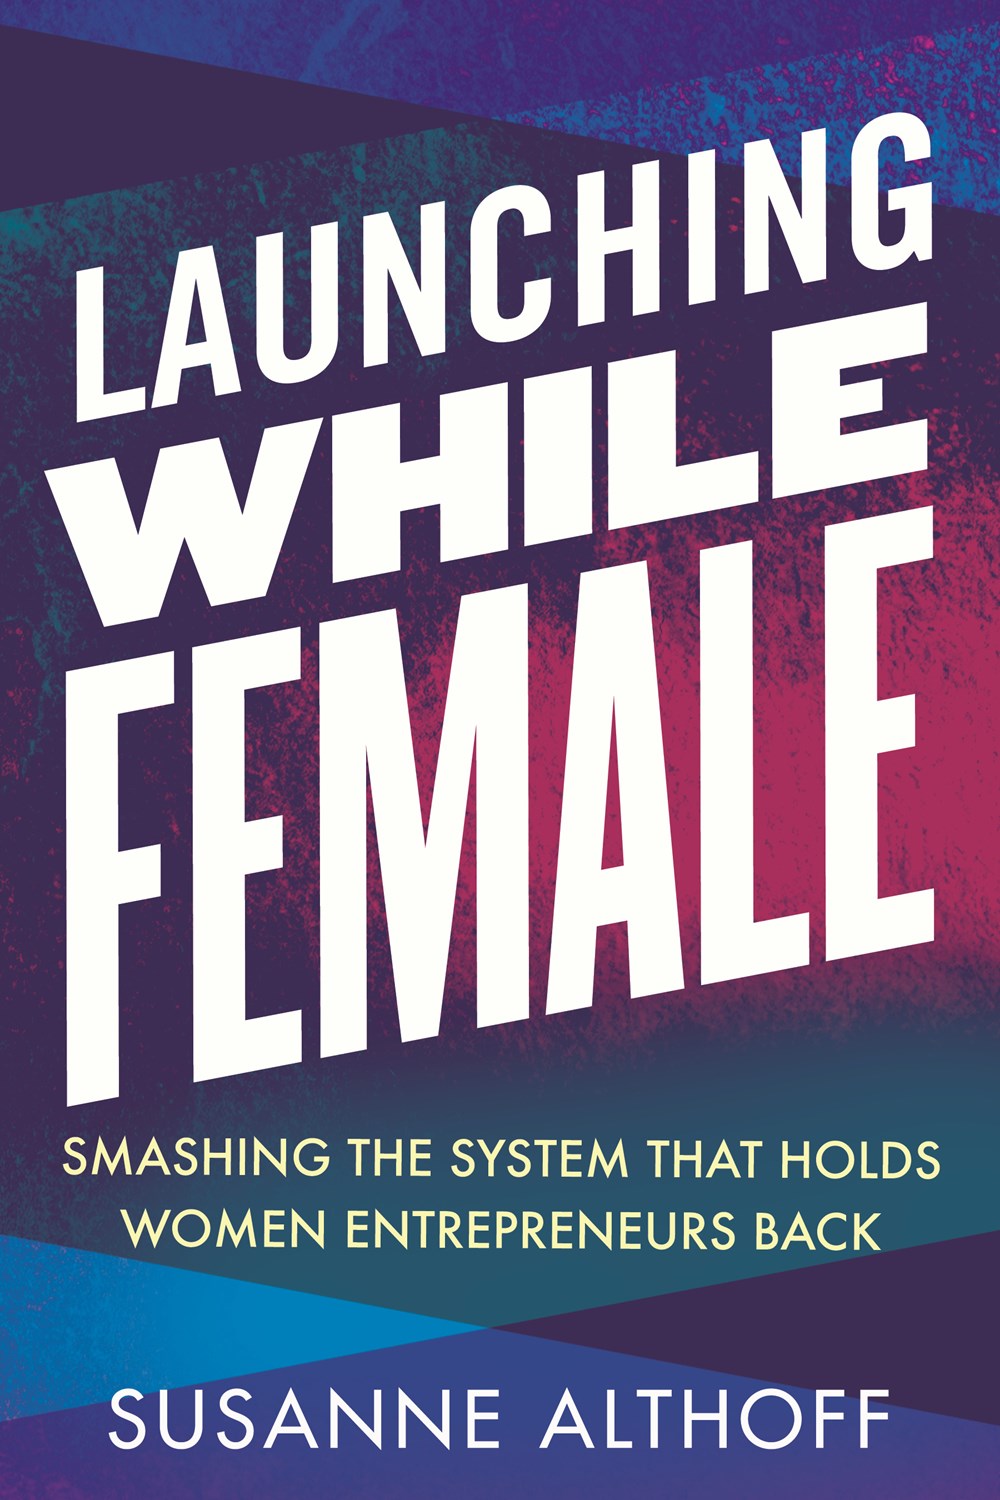 Launching While Female Smashing the System That Holds Women Entrepreneurs Back